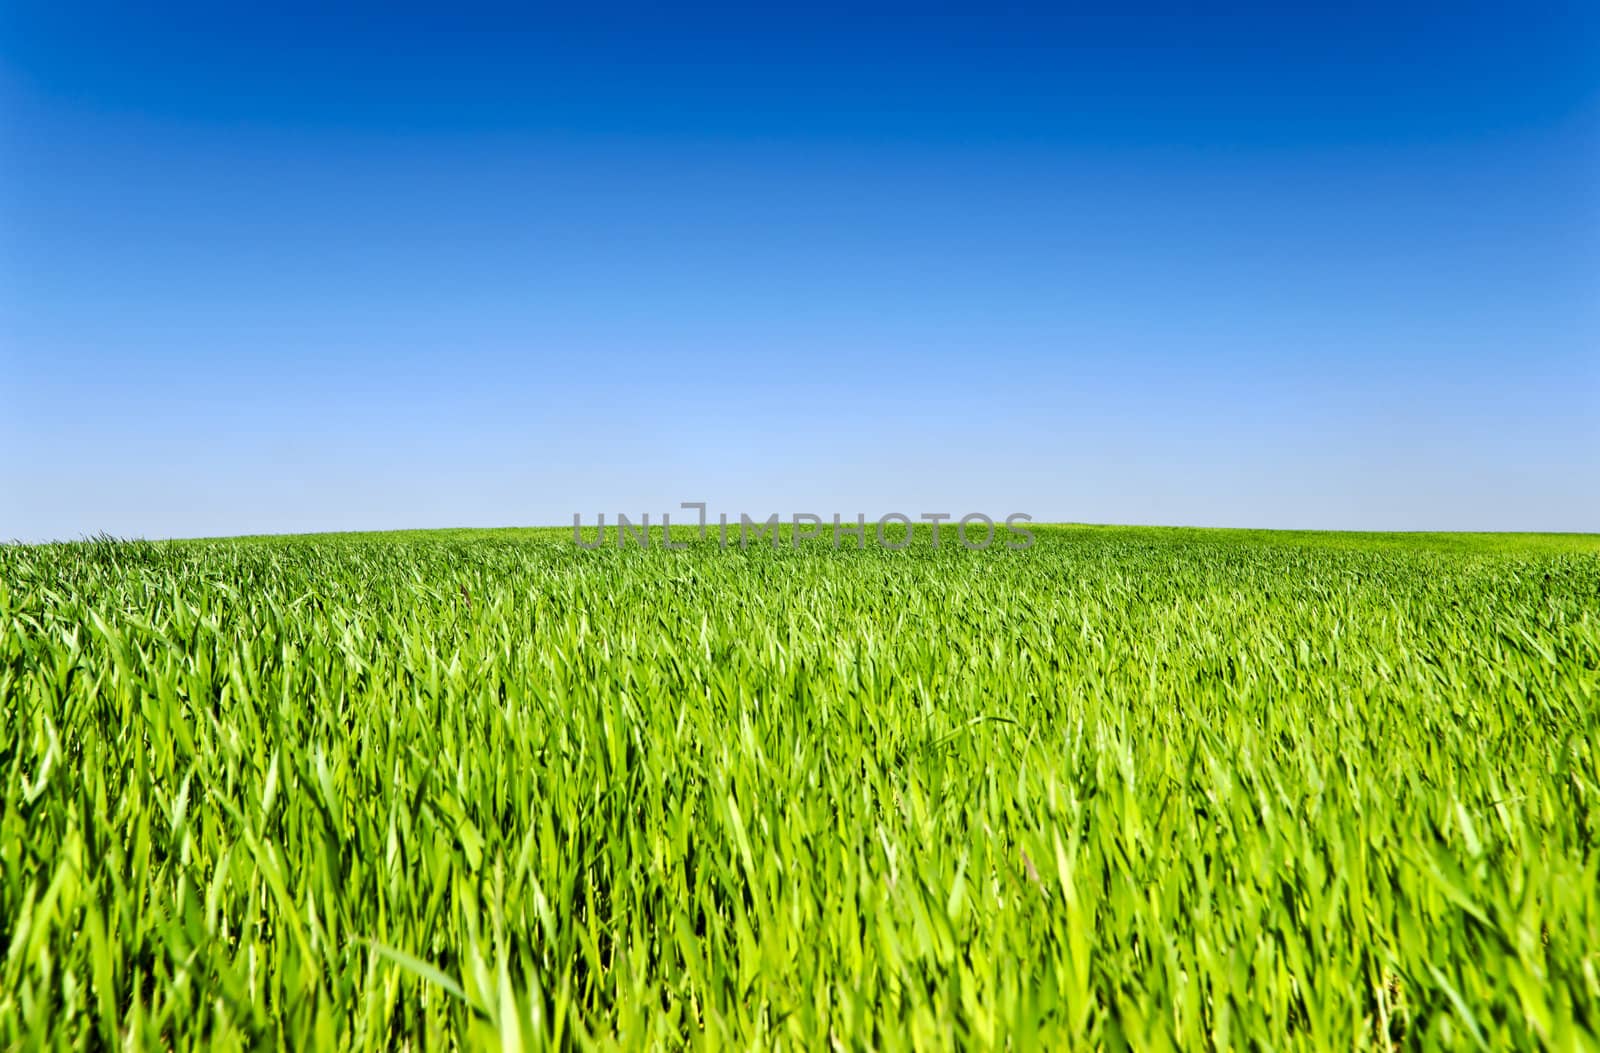 Blue sky and green grass field, focus on horizon